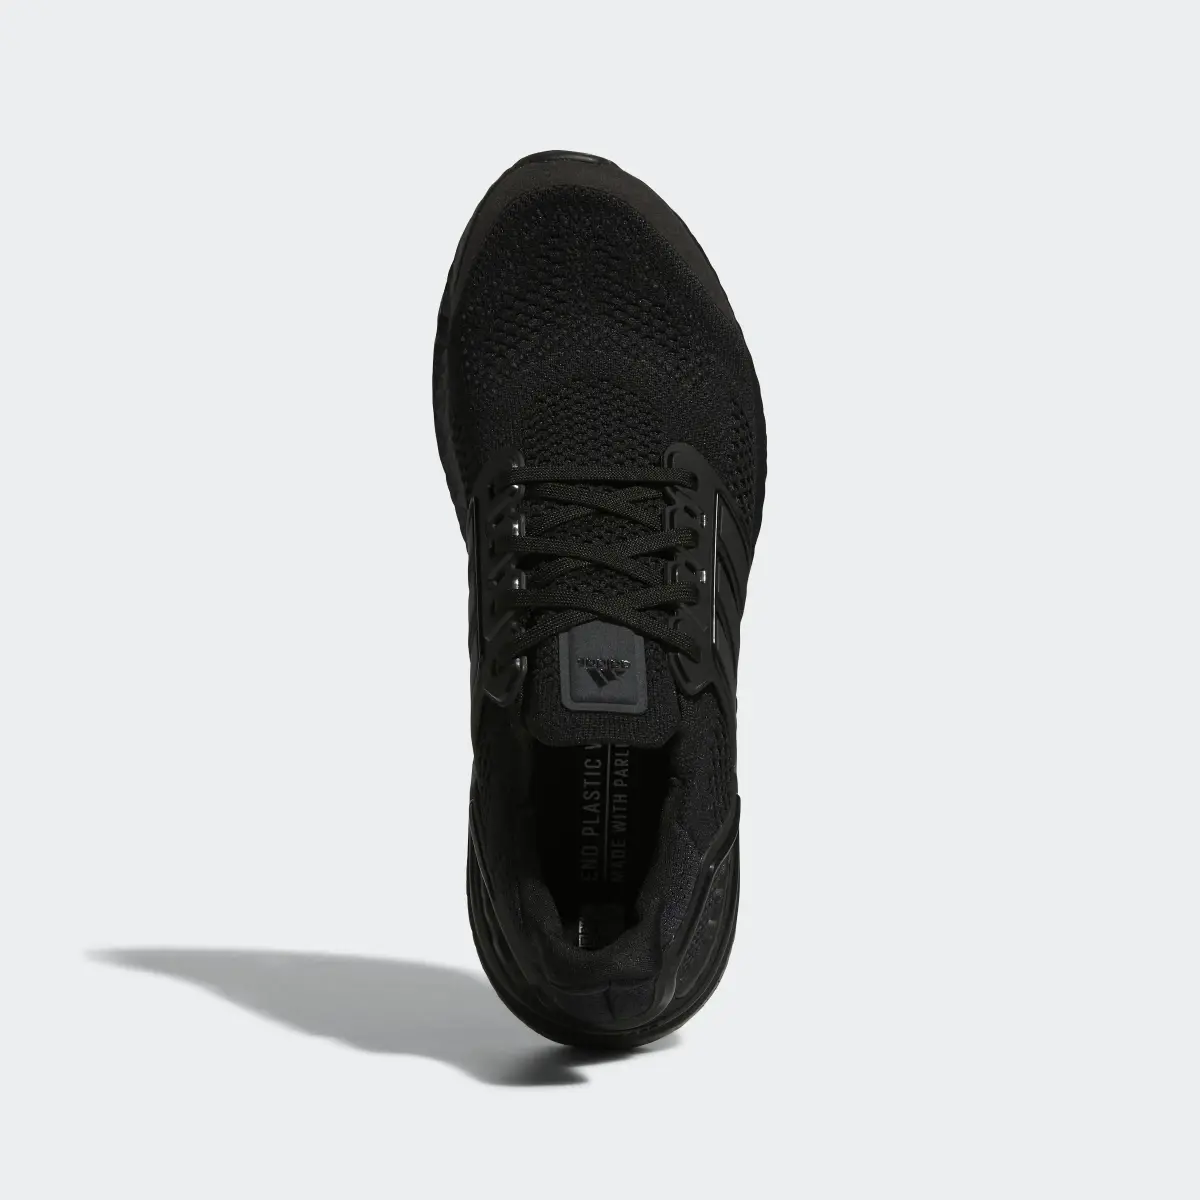 Adidas Ultraboost 19.5 DNA Running Sportswear Lifestyle Shoes. 3